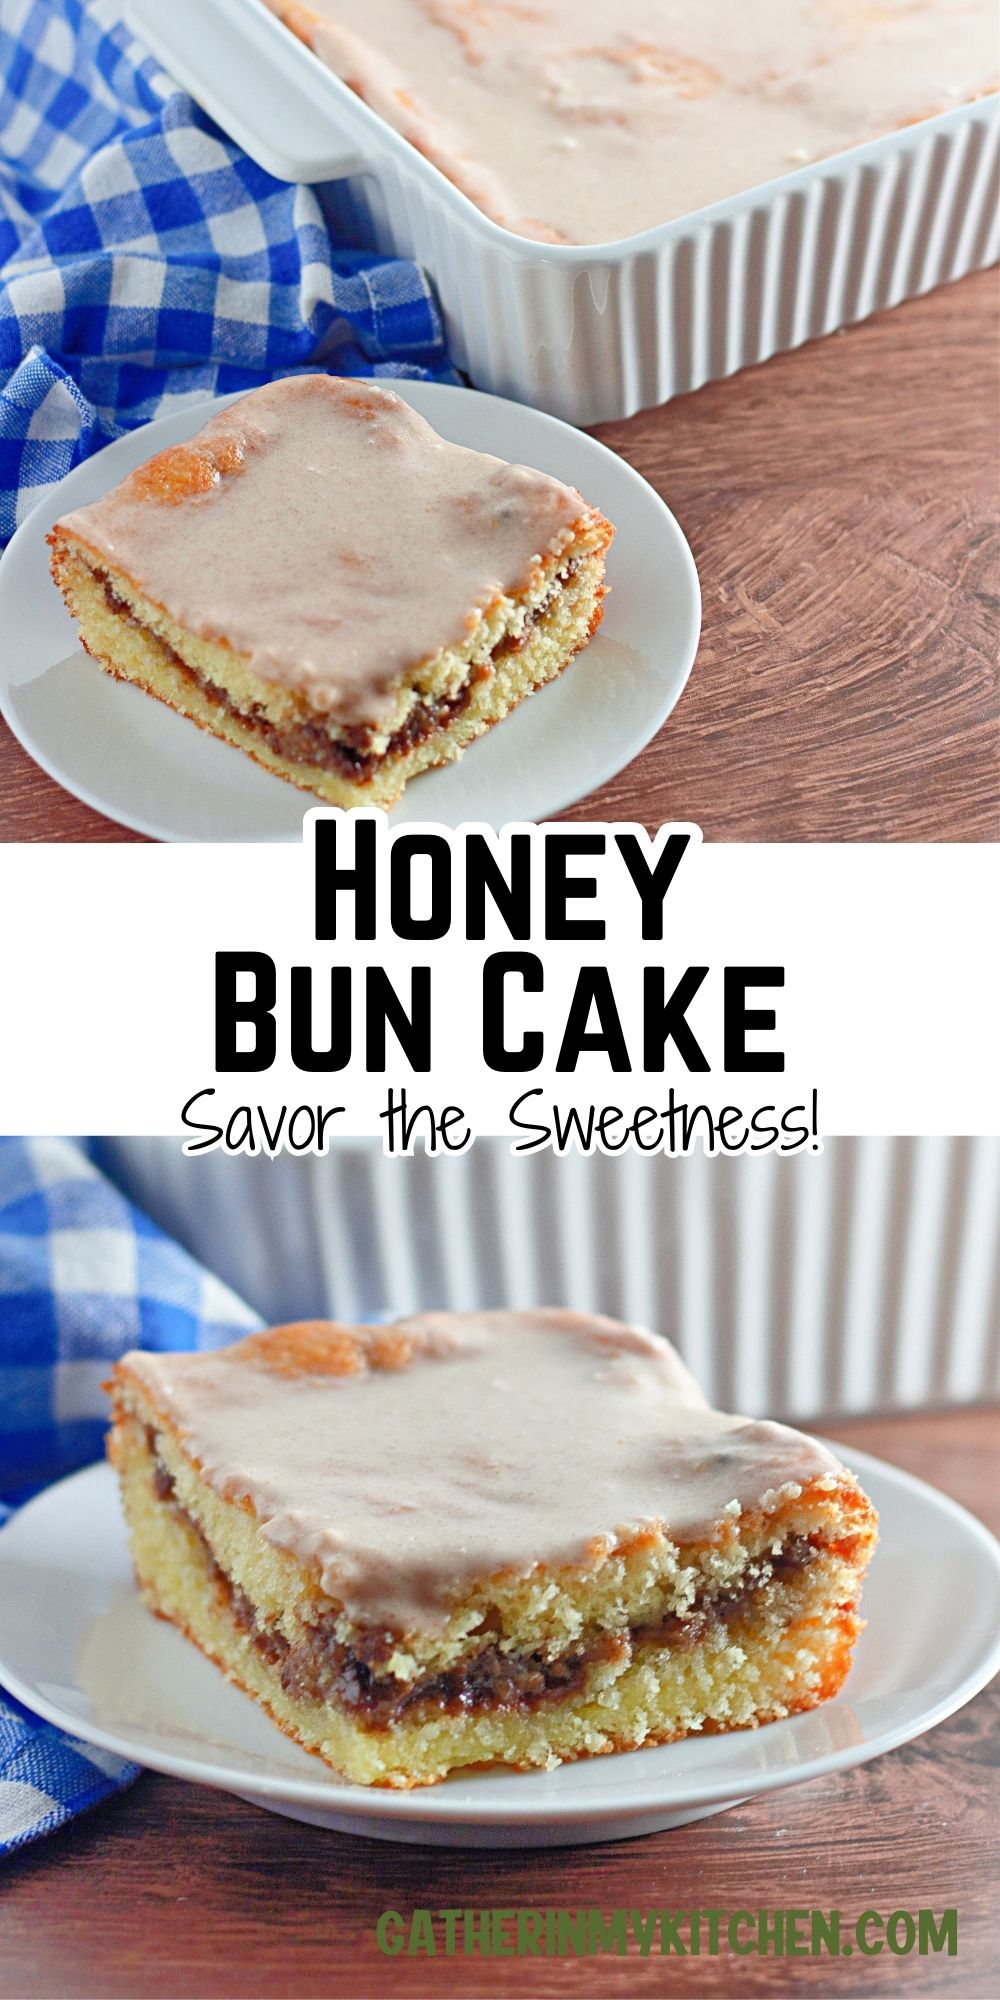 Pin image: top and bottom pics of honey bun cake on a plate and middle says "Honey Bun Cake: savor the sweetness".